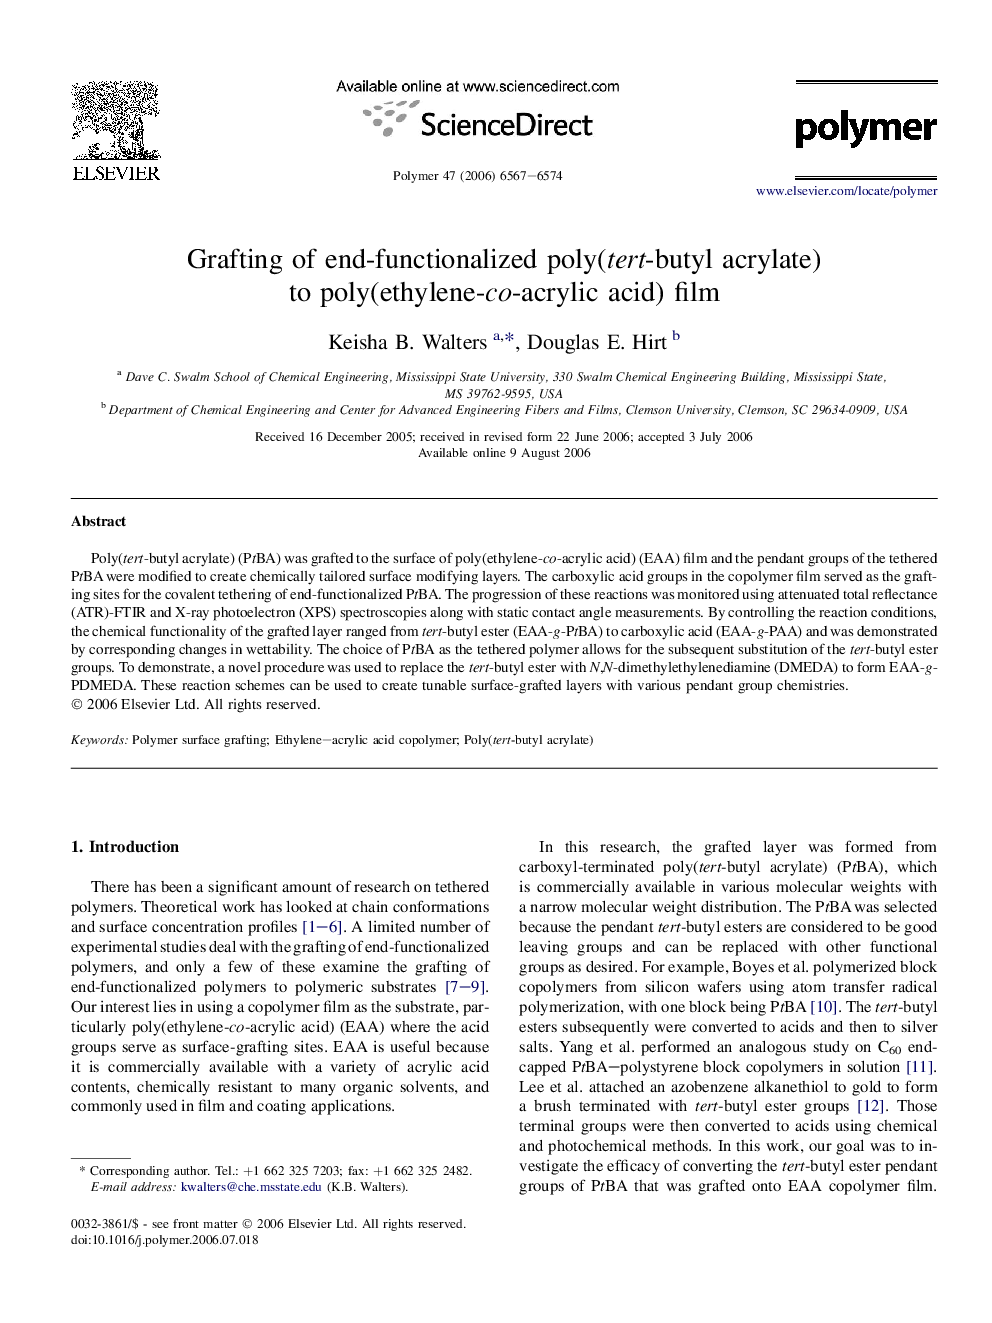 Grafting of end-functionalized poly(tert-butyl acrylate) to poly(ethylene-co-acrylic acid) film